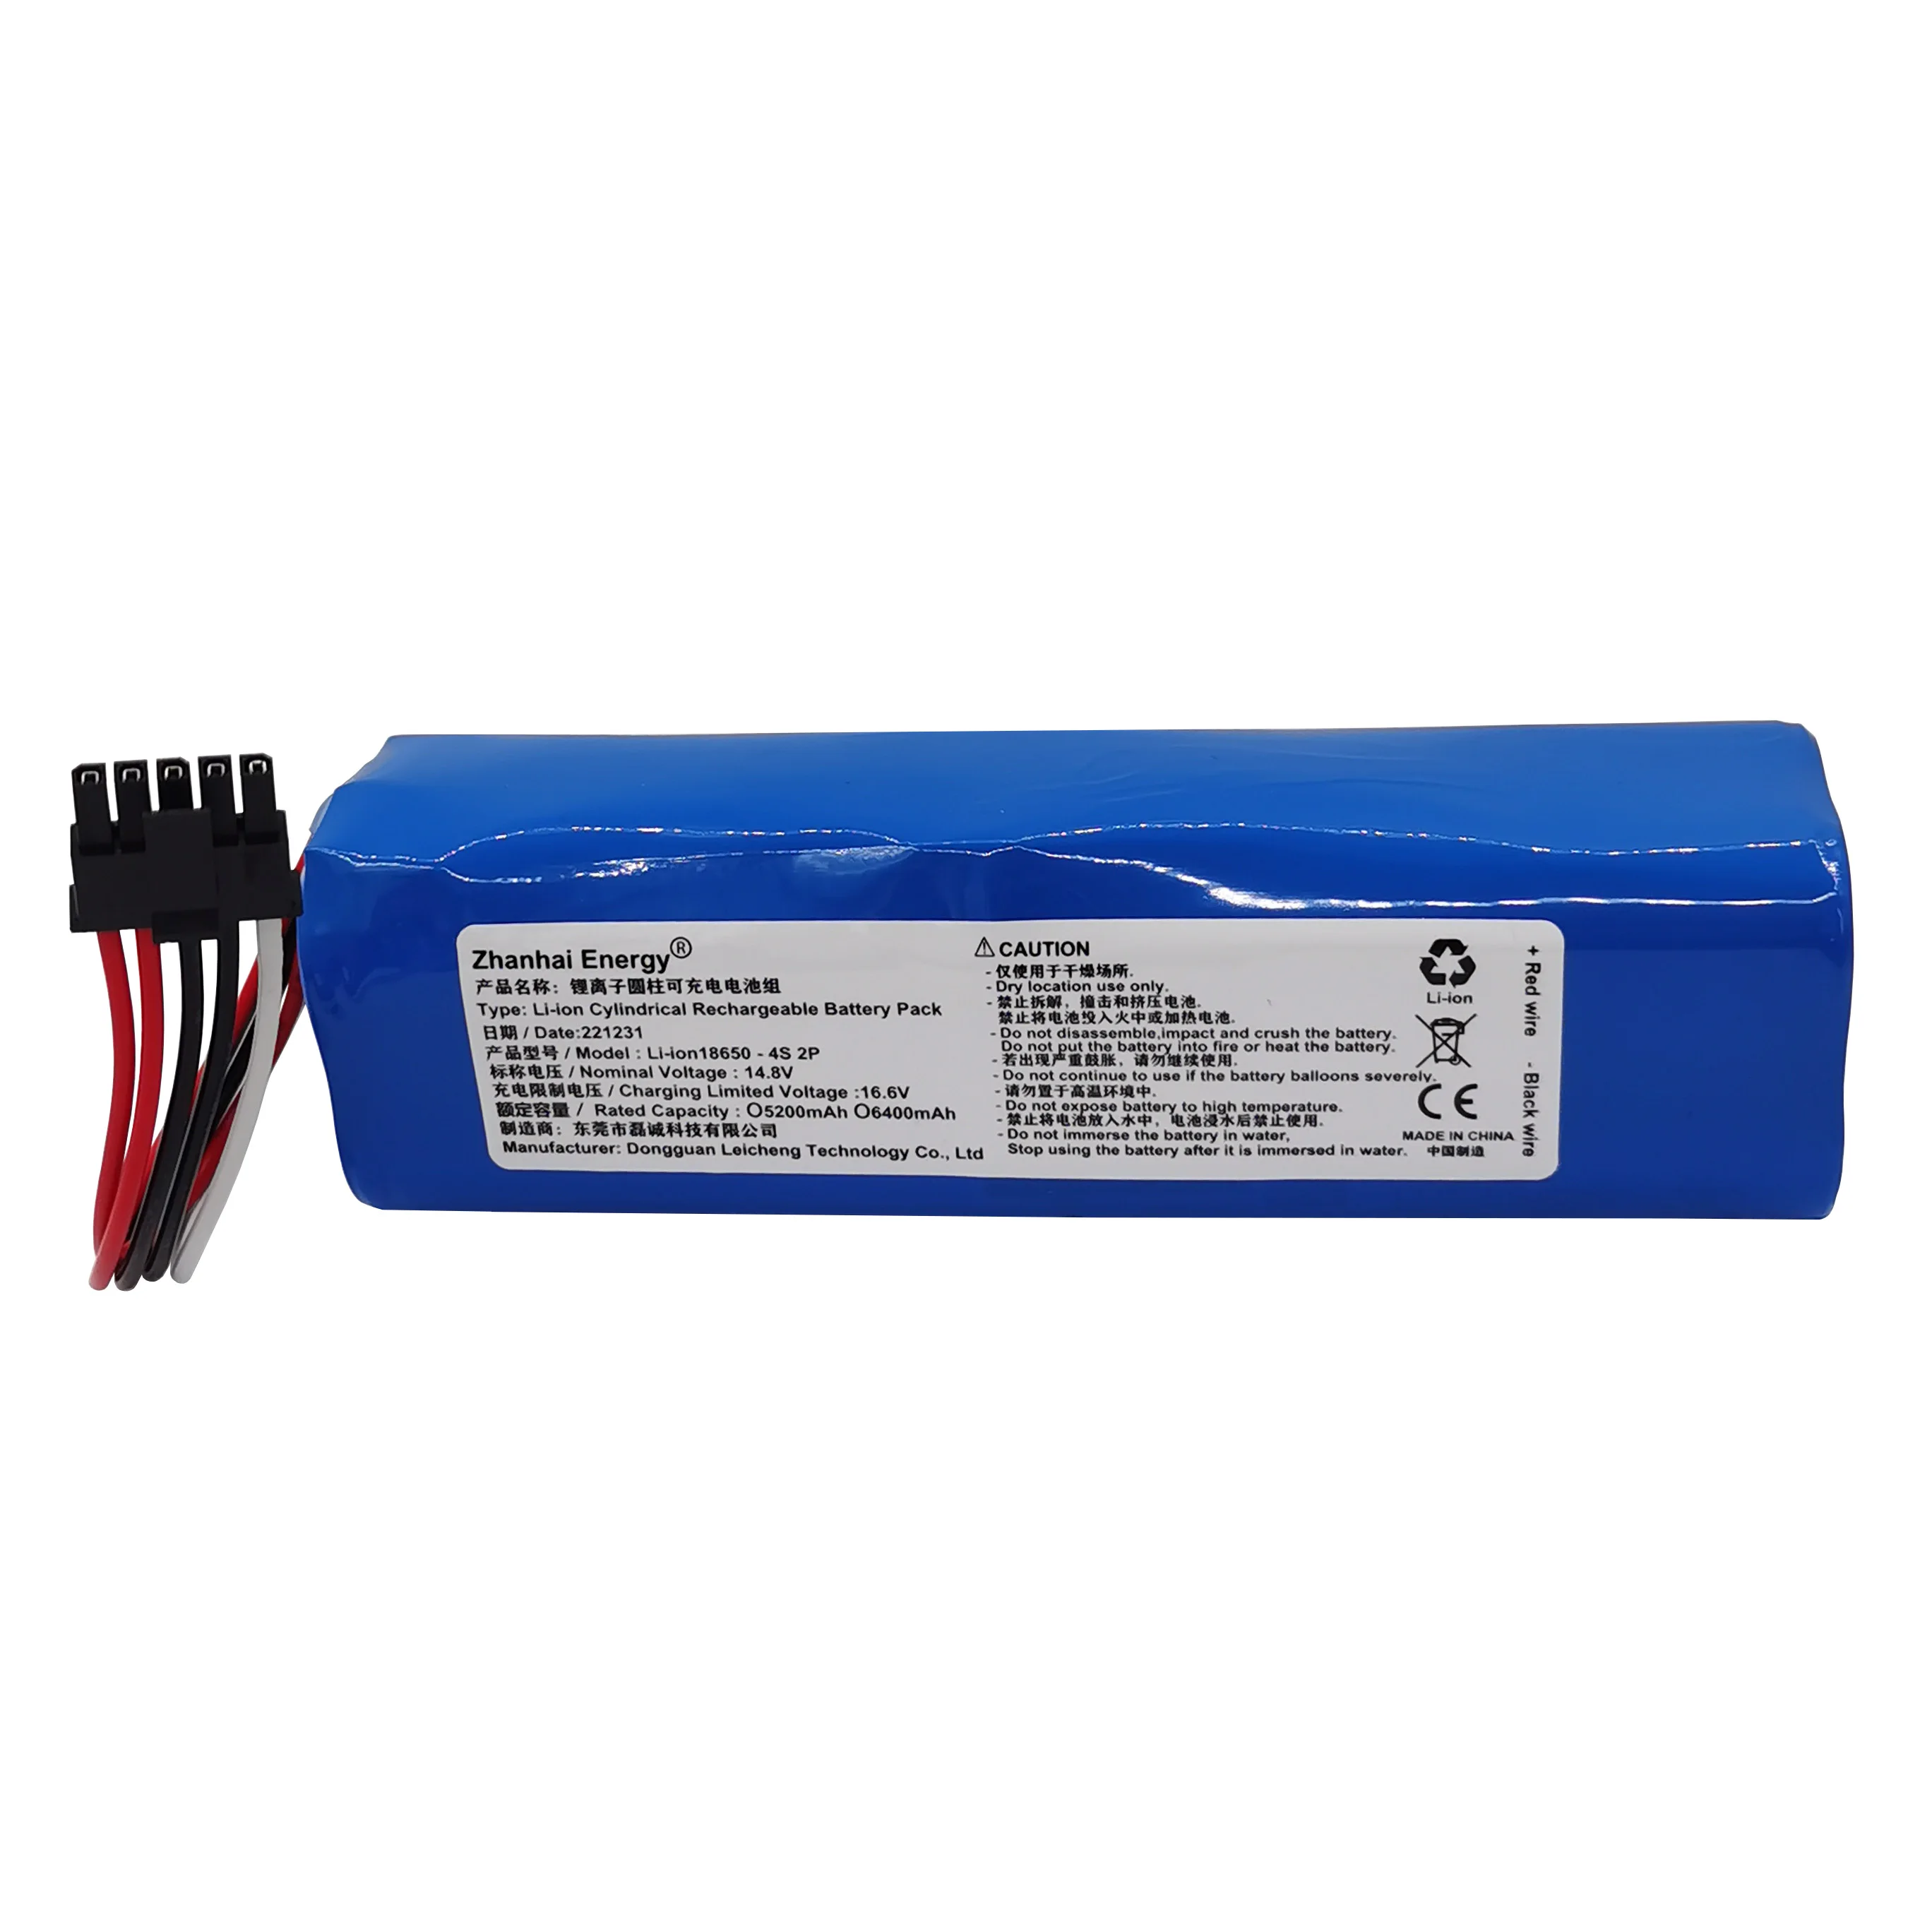 Cordless Self-heating Bento Box Built-in Li-ion Battery Pack LP18650 4P  10000mAh